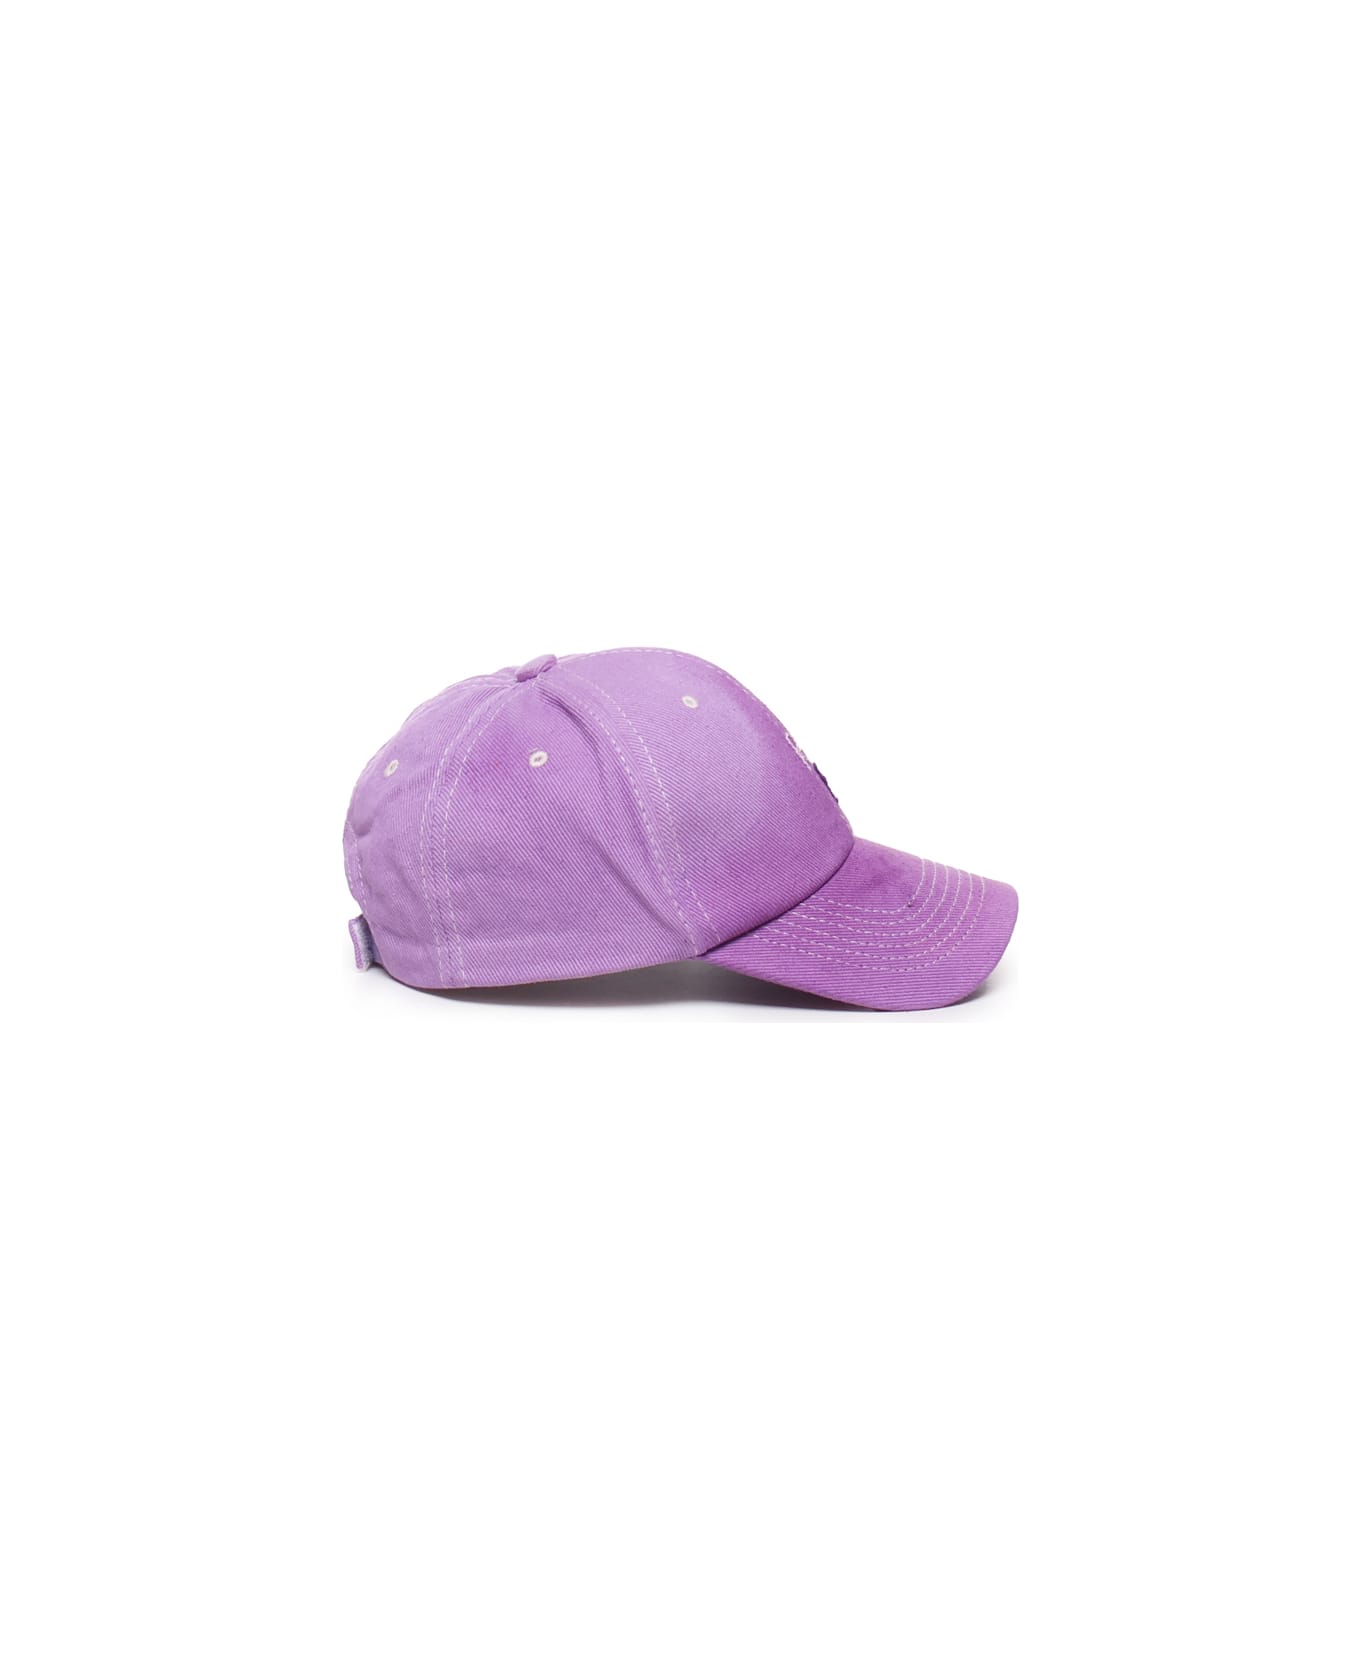 Ruslan Baginskiy Baseball Cap With Logo - Purple 帽子